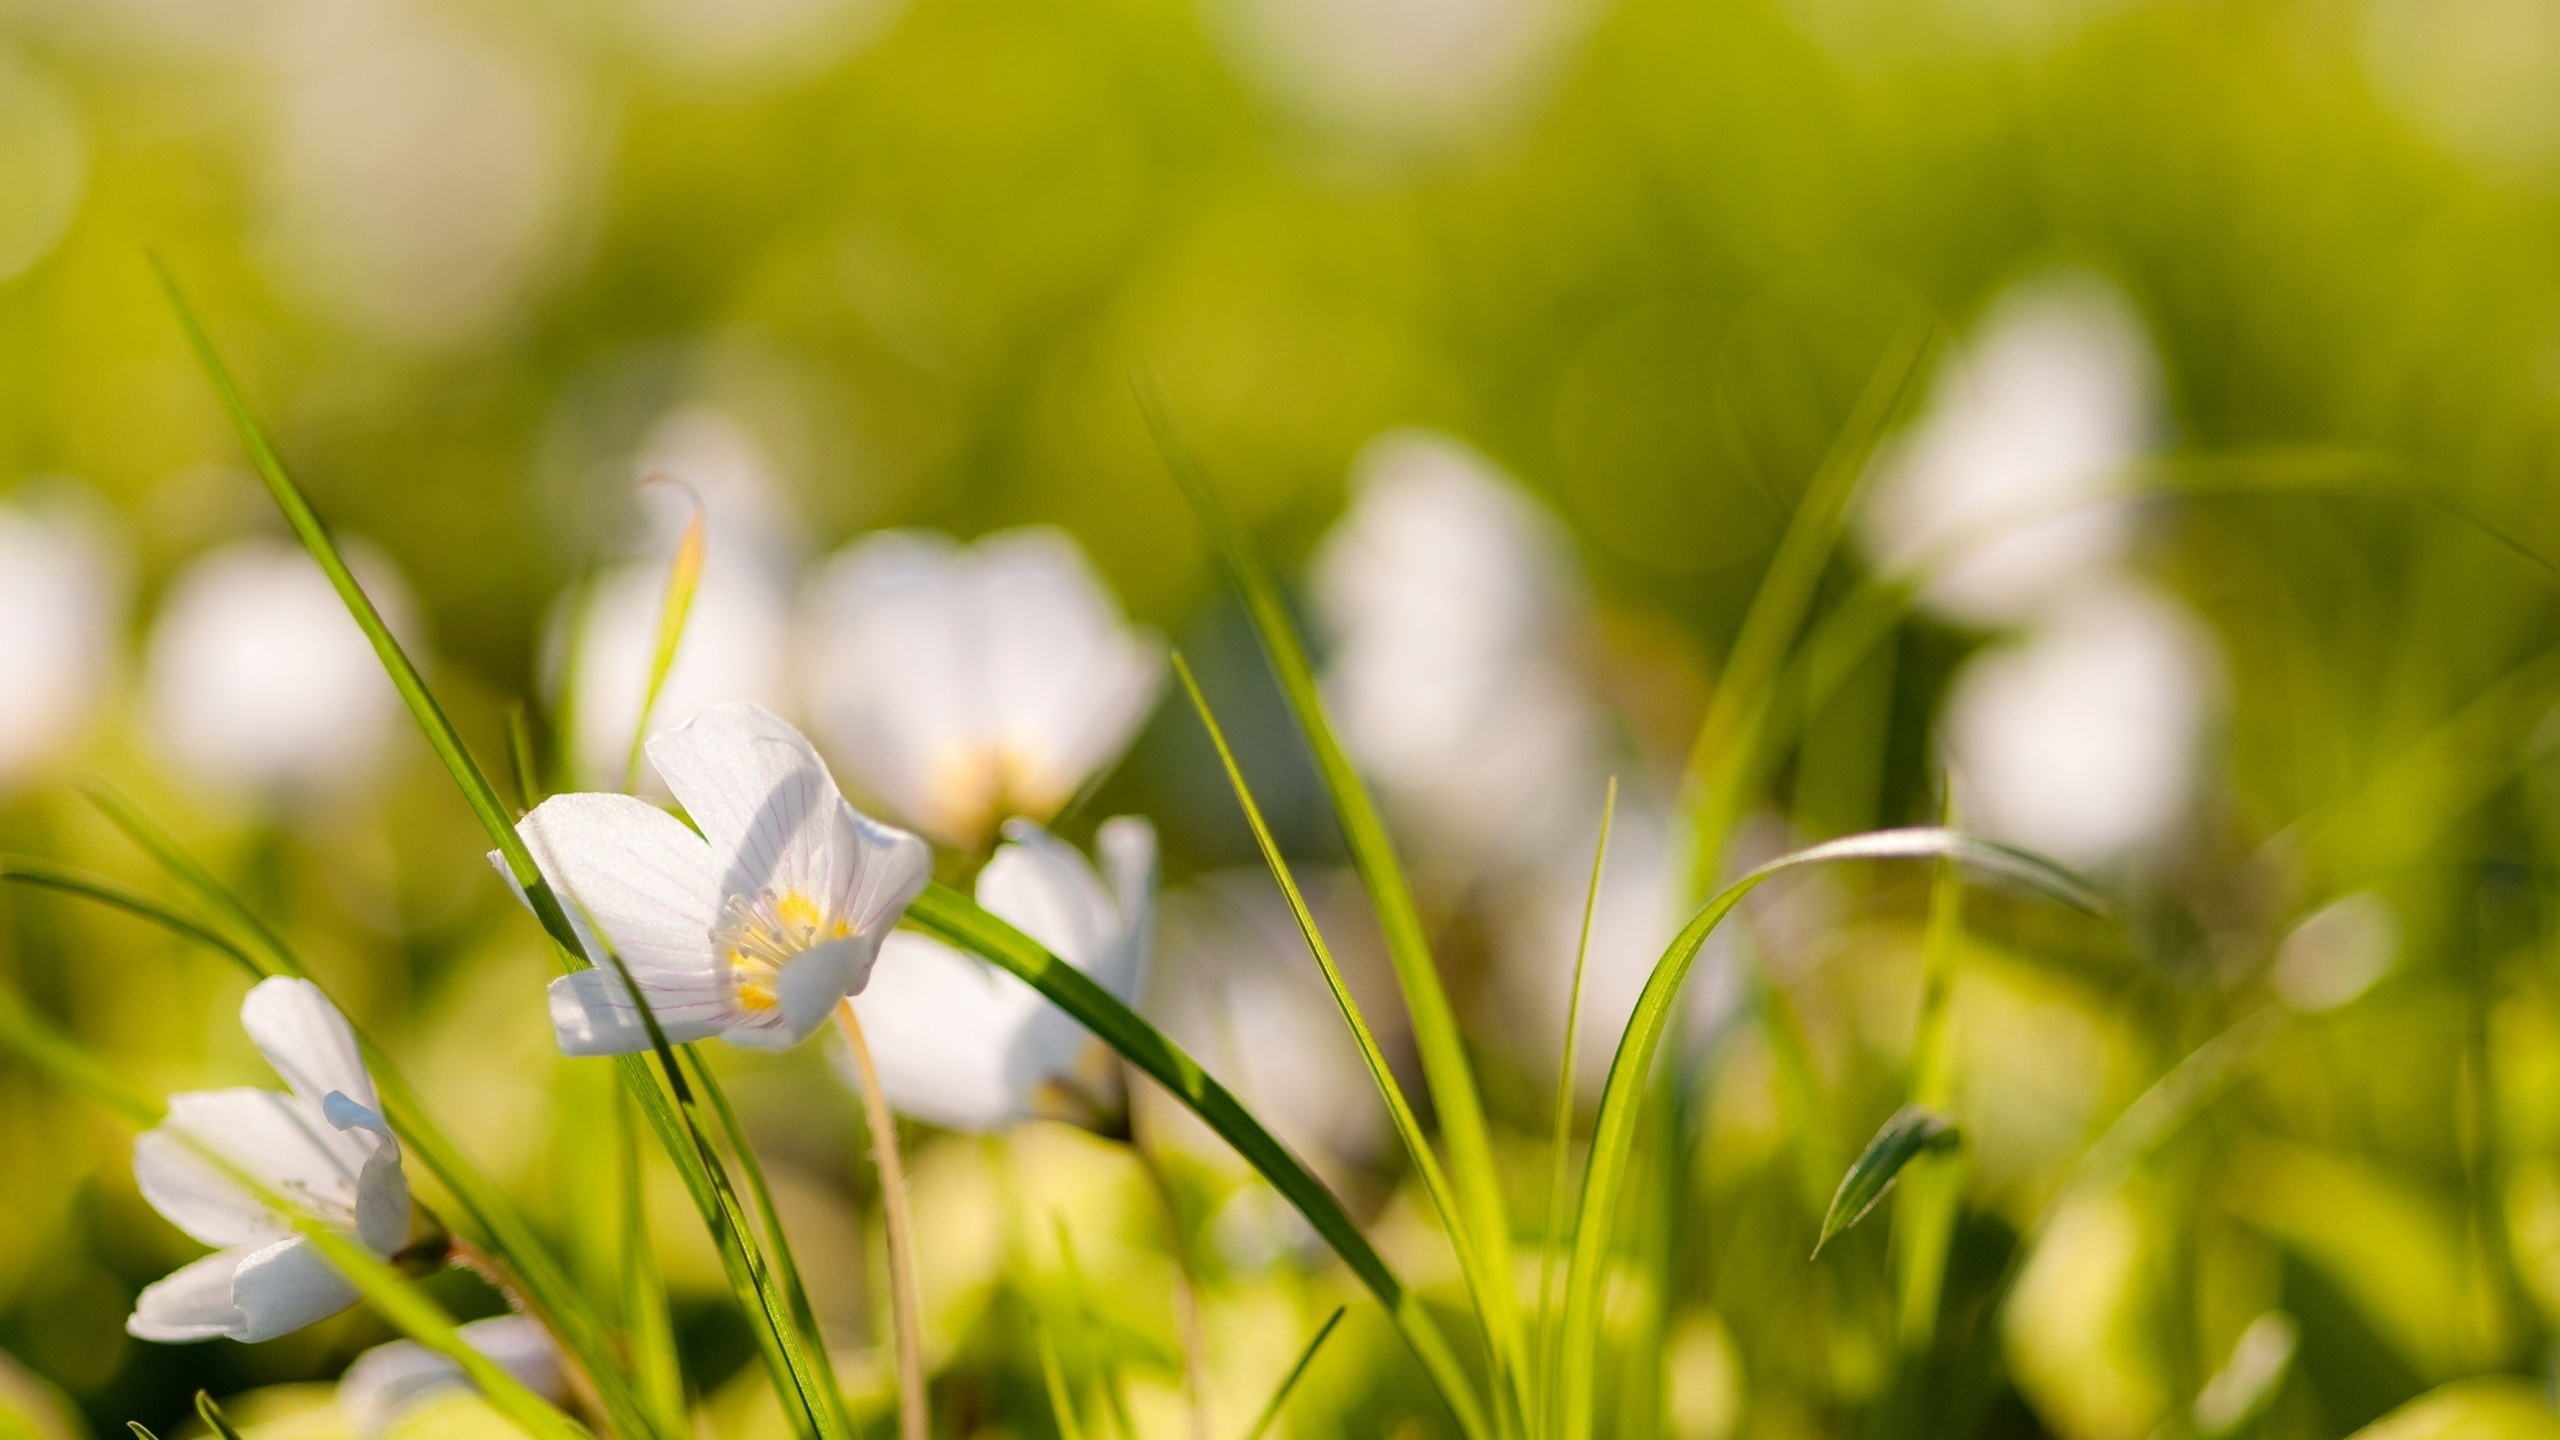 White flowers on green grass.